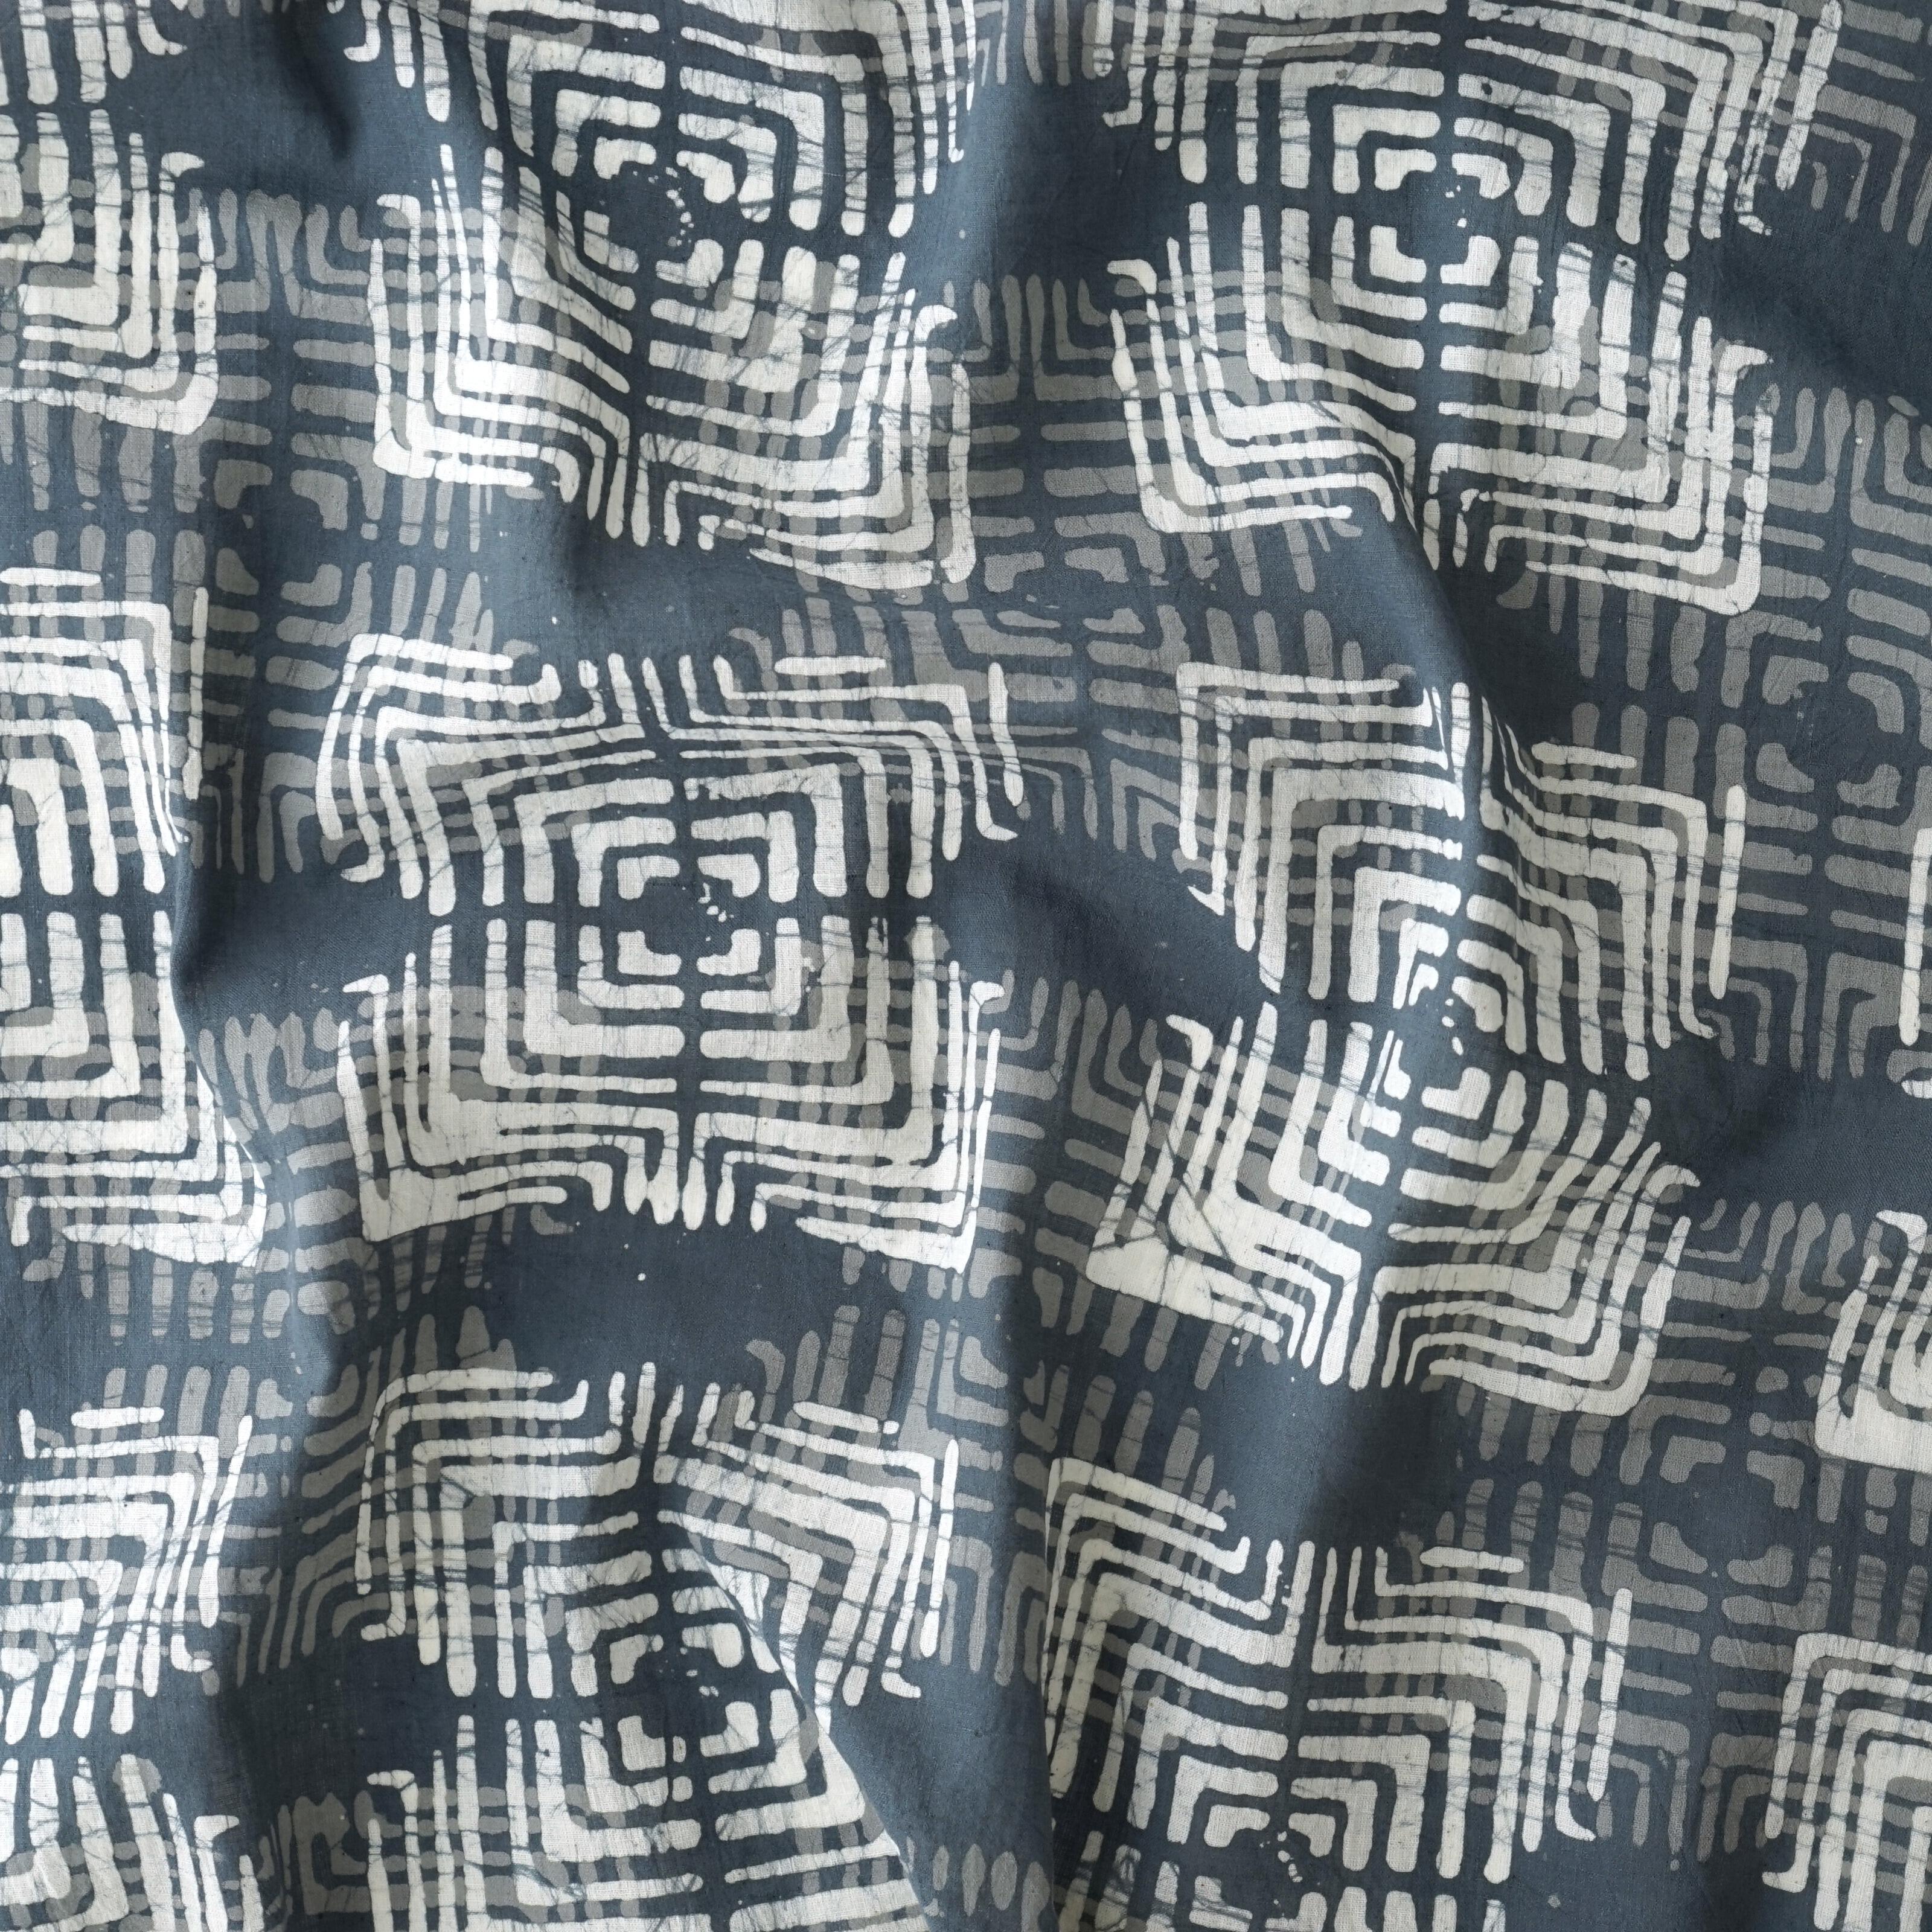 100% Block-Printed Batik Cotton Fabric From India - Mirage Design - Grey Dye - Contrast